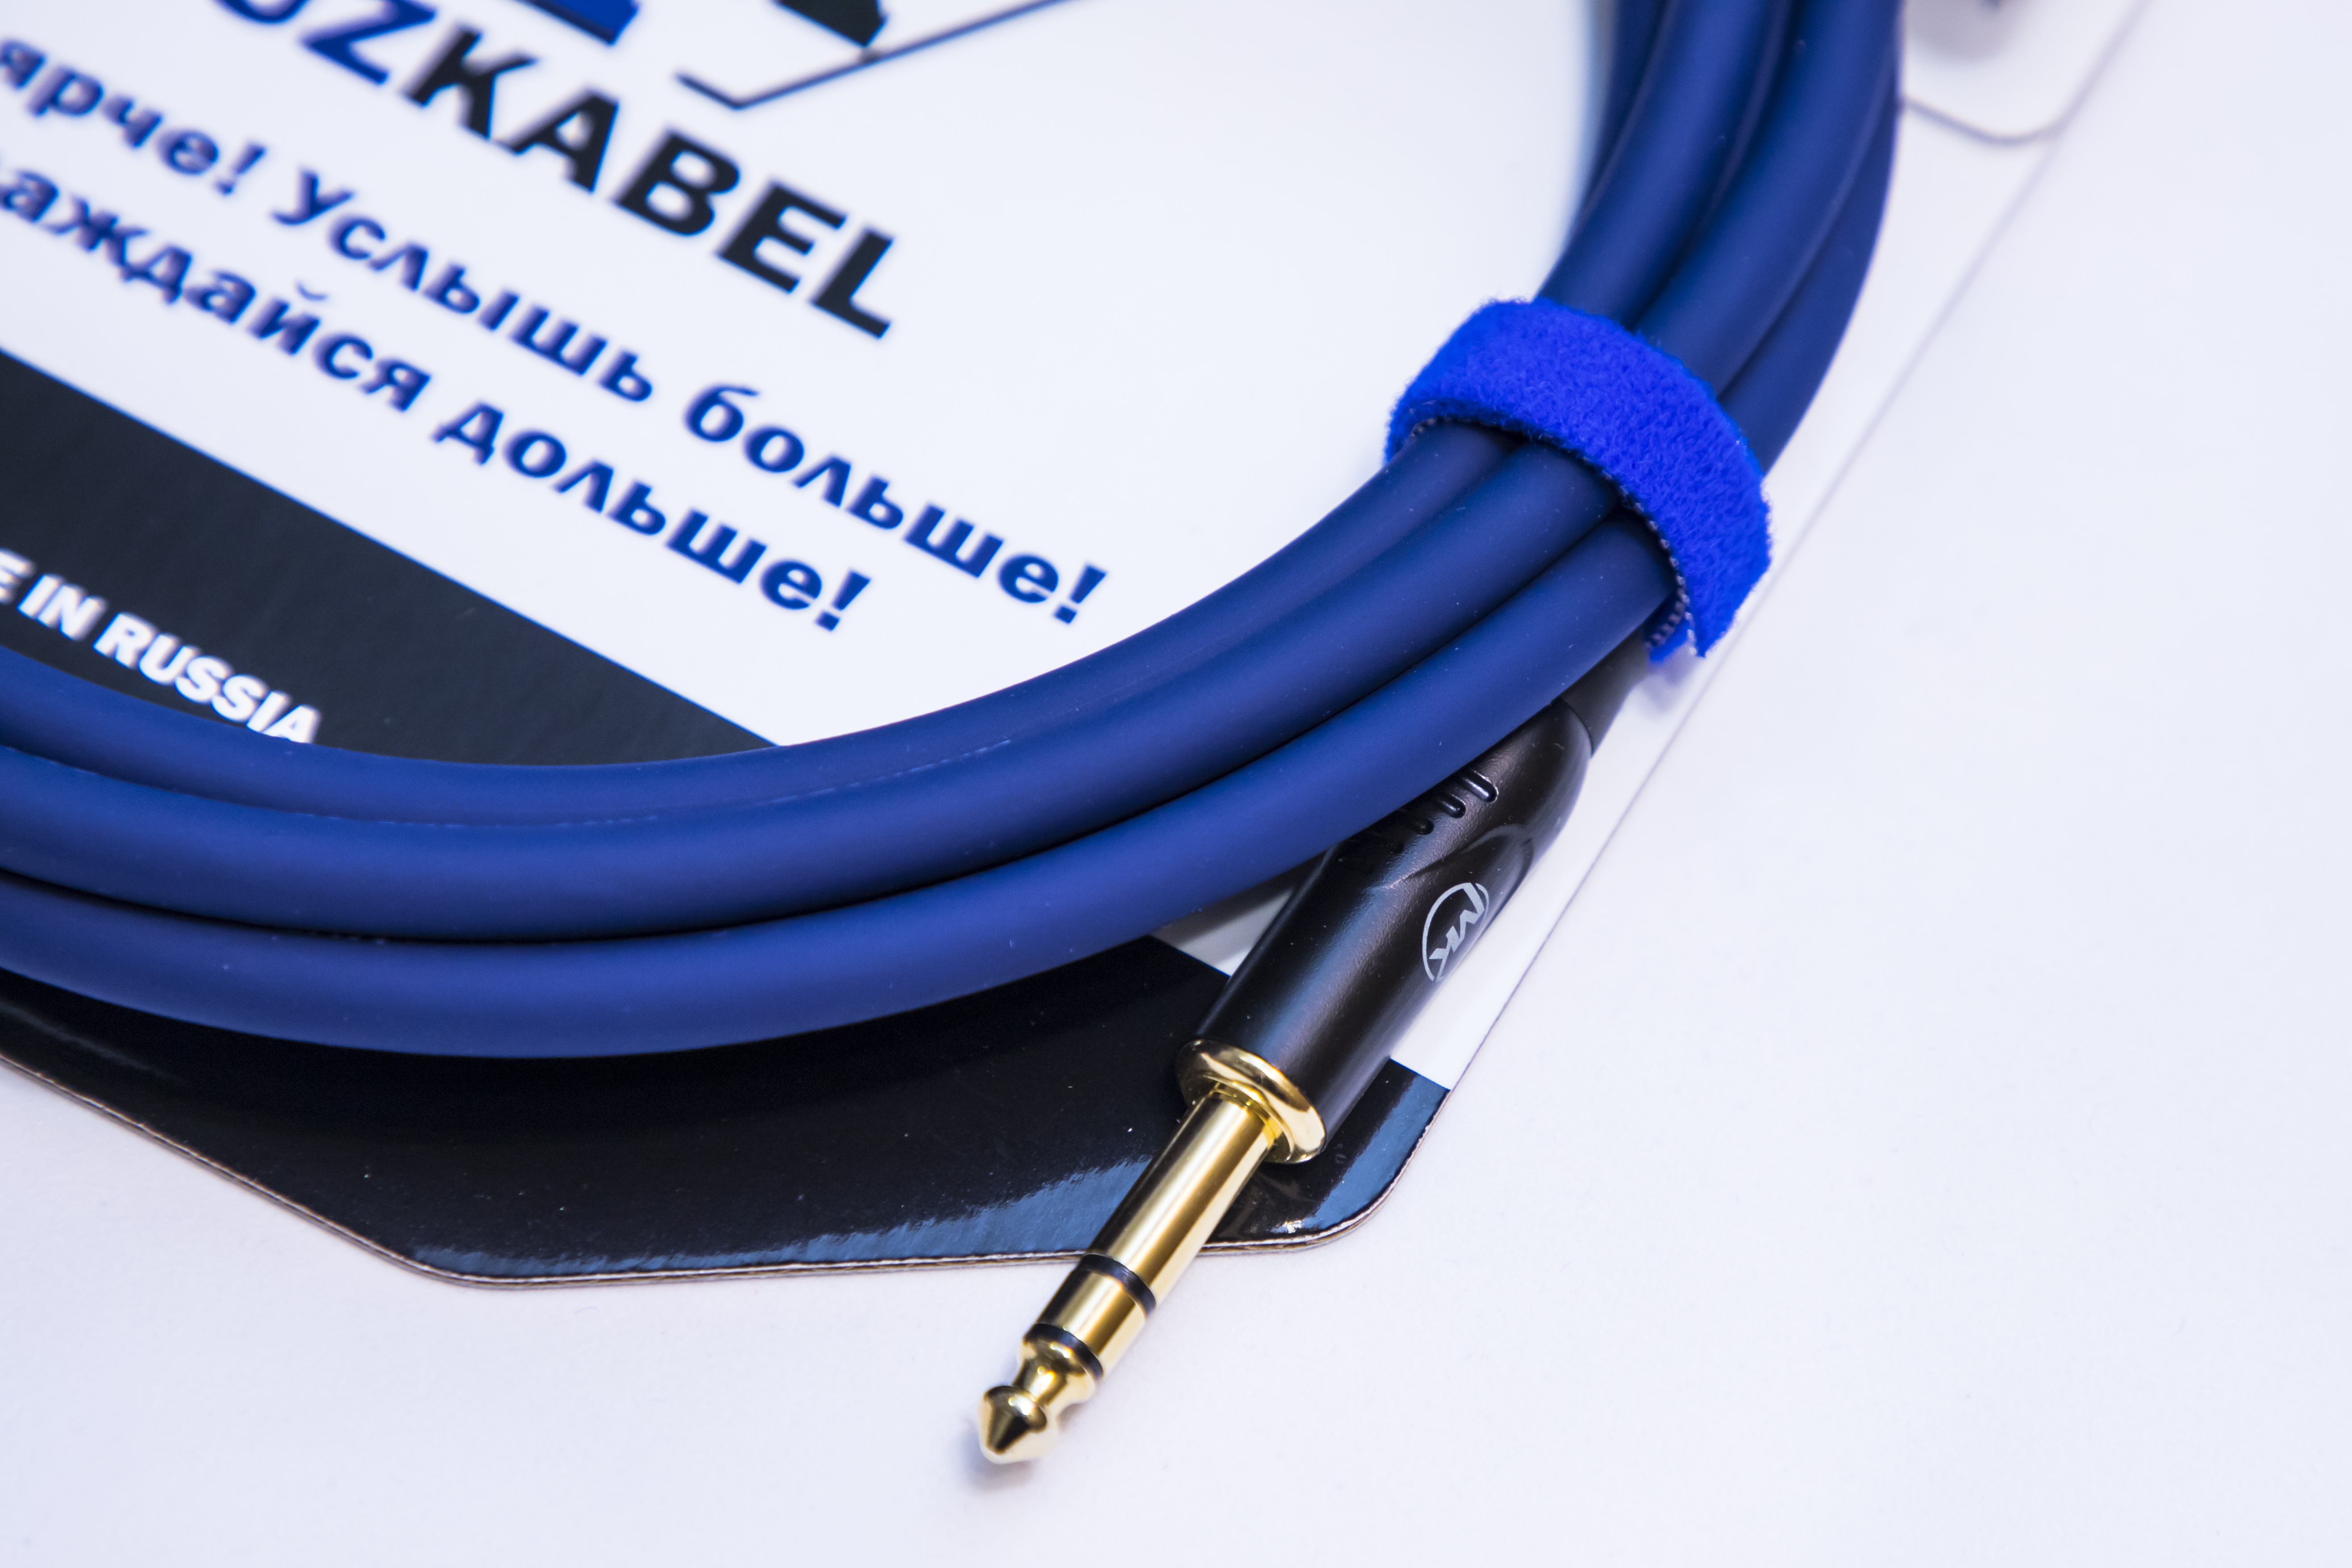 Аудио кабель MUZKABEL BFJMK1S - 6 метров, XLR (мама) - JACK (стерео)